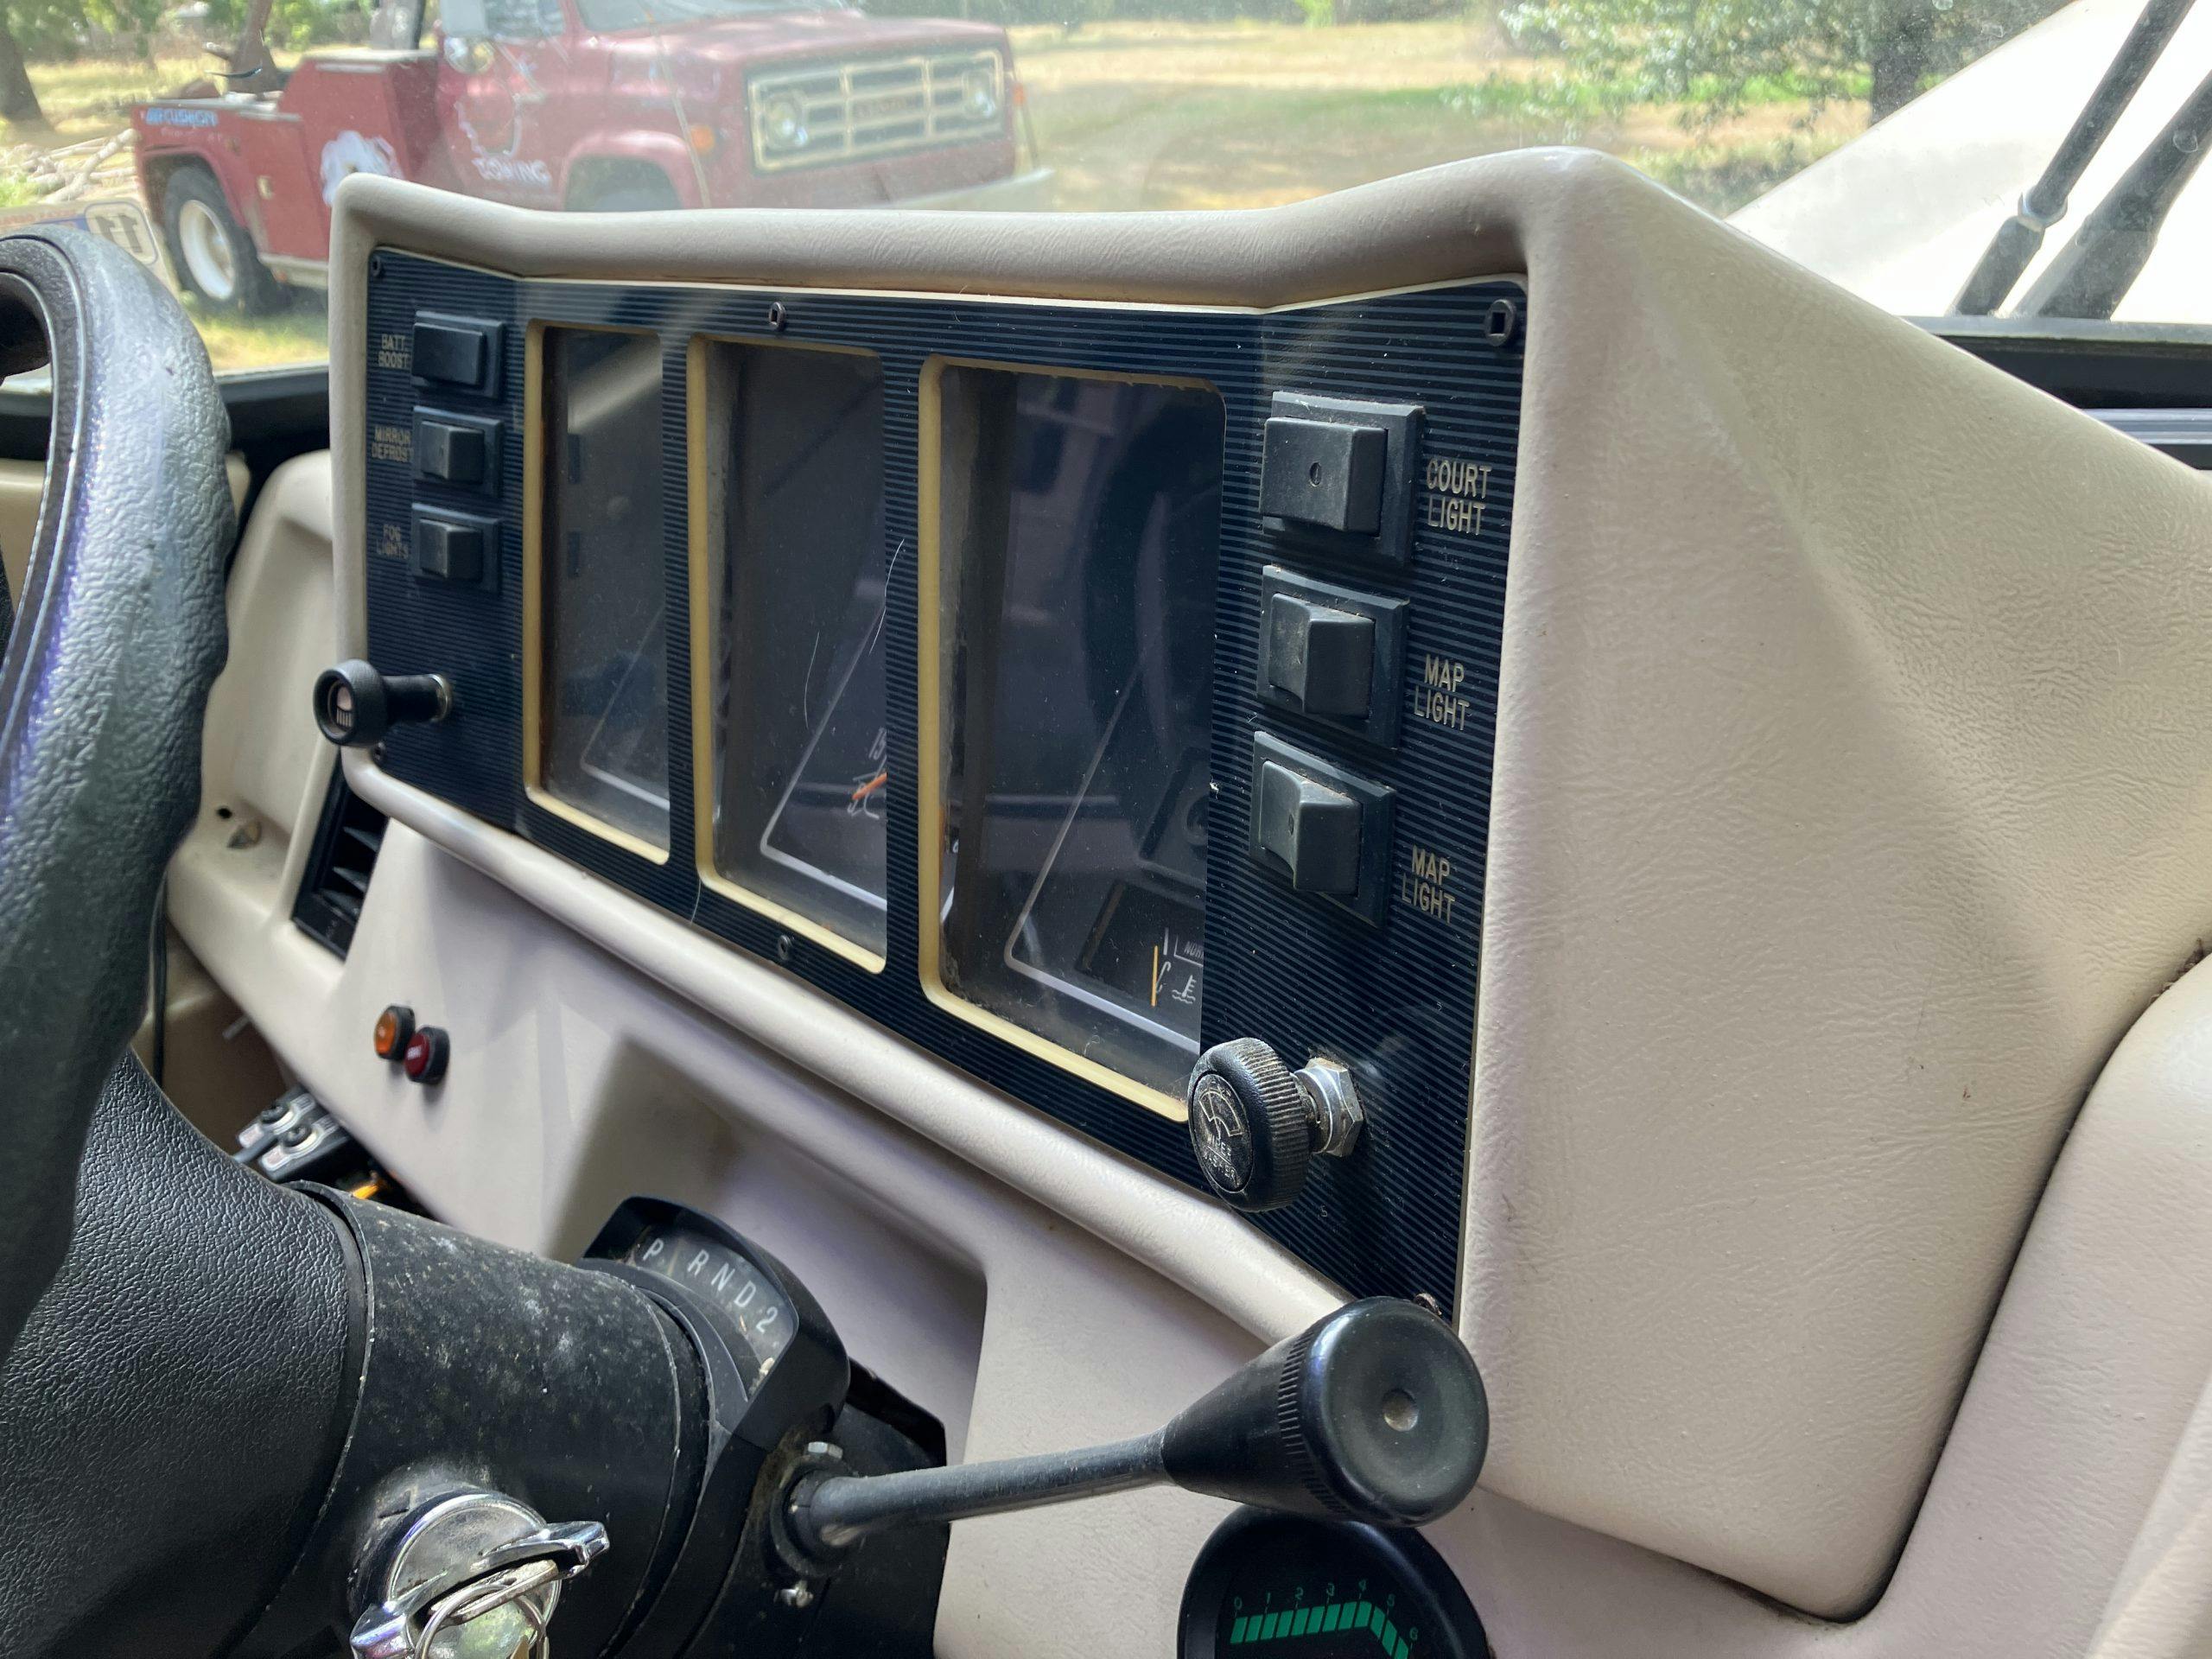 1987 EMC Eldorado Starfire RV interior dash